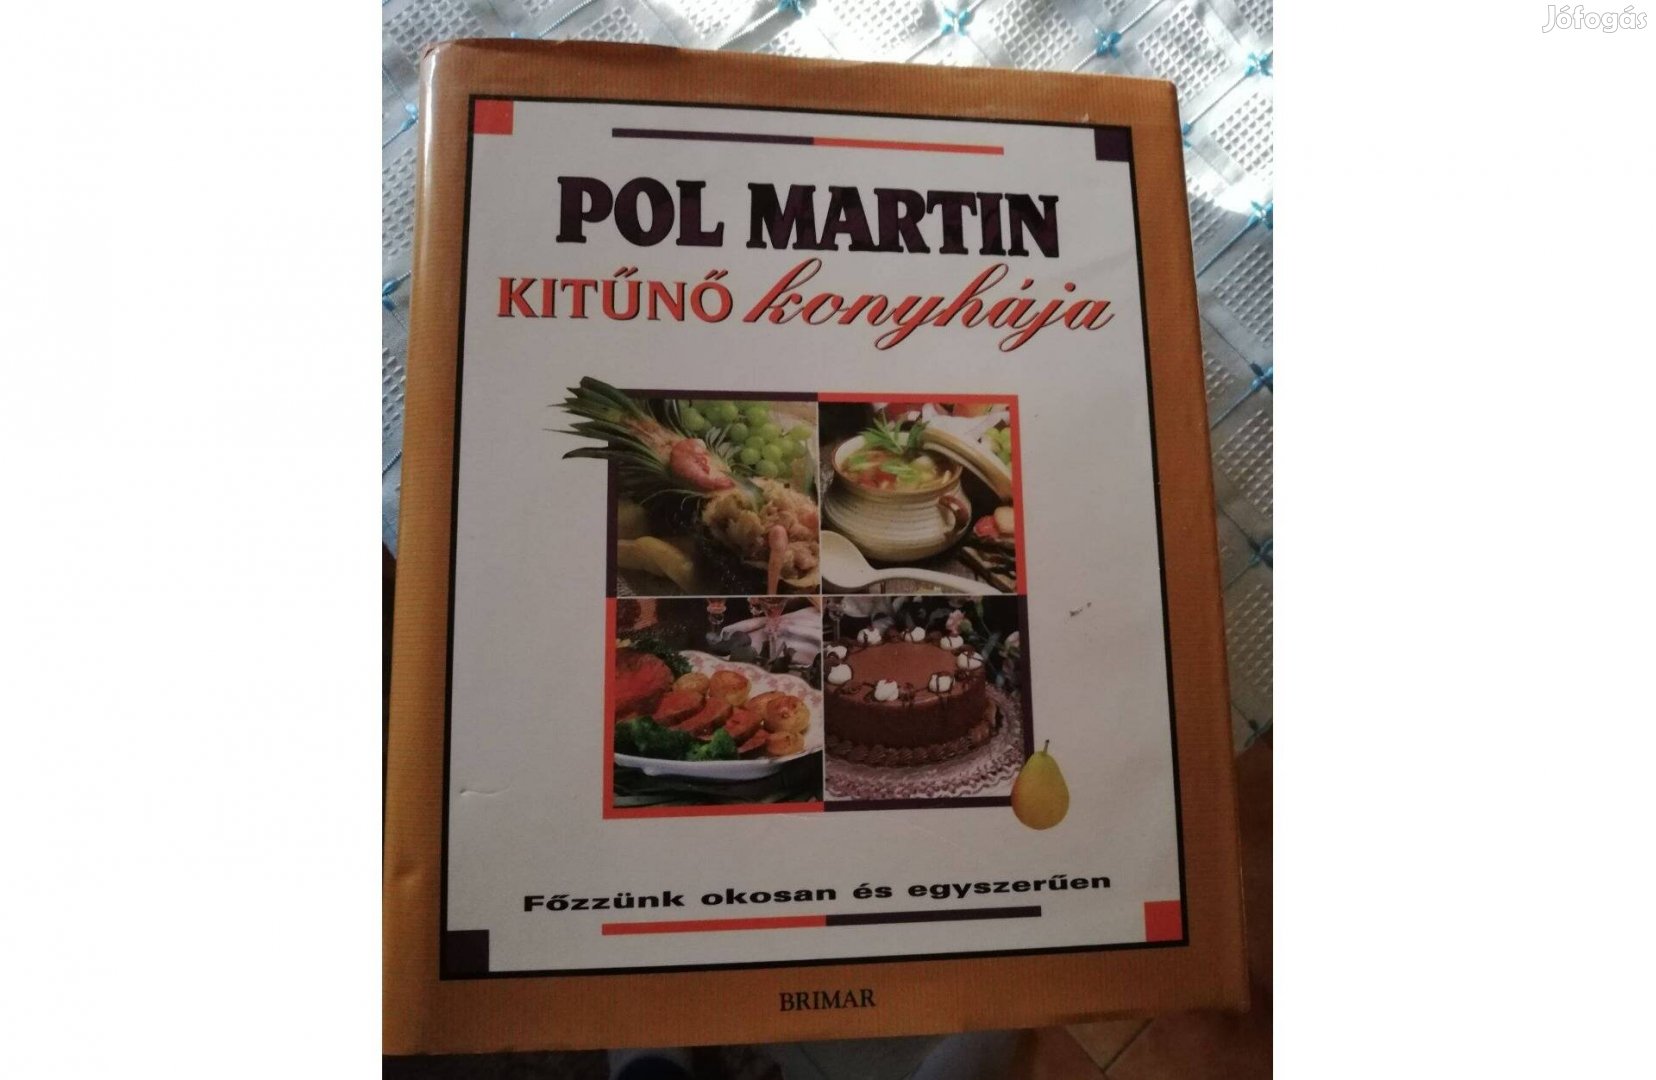 Pol Martin kitűnő konyhája 800 forint